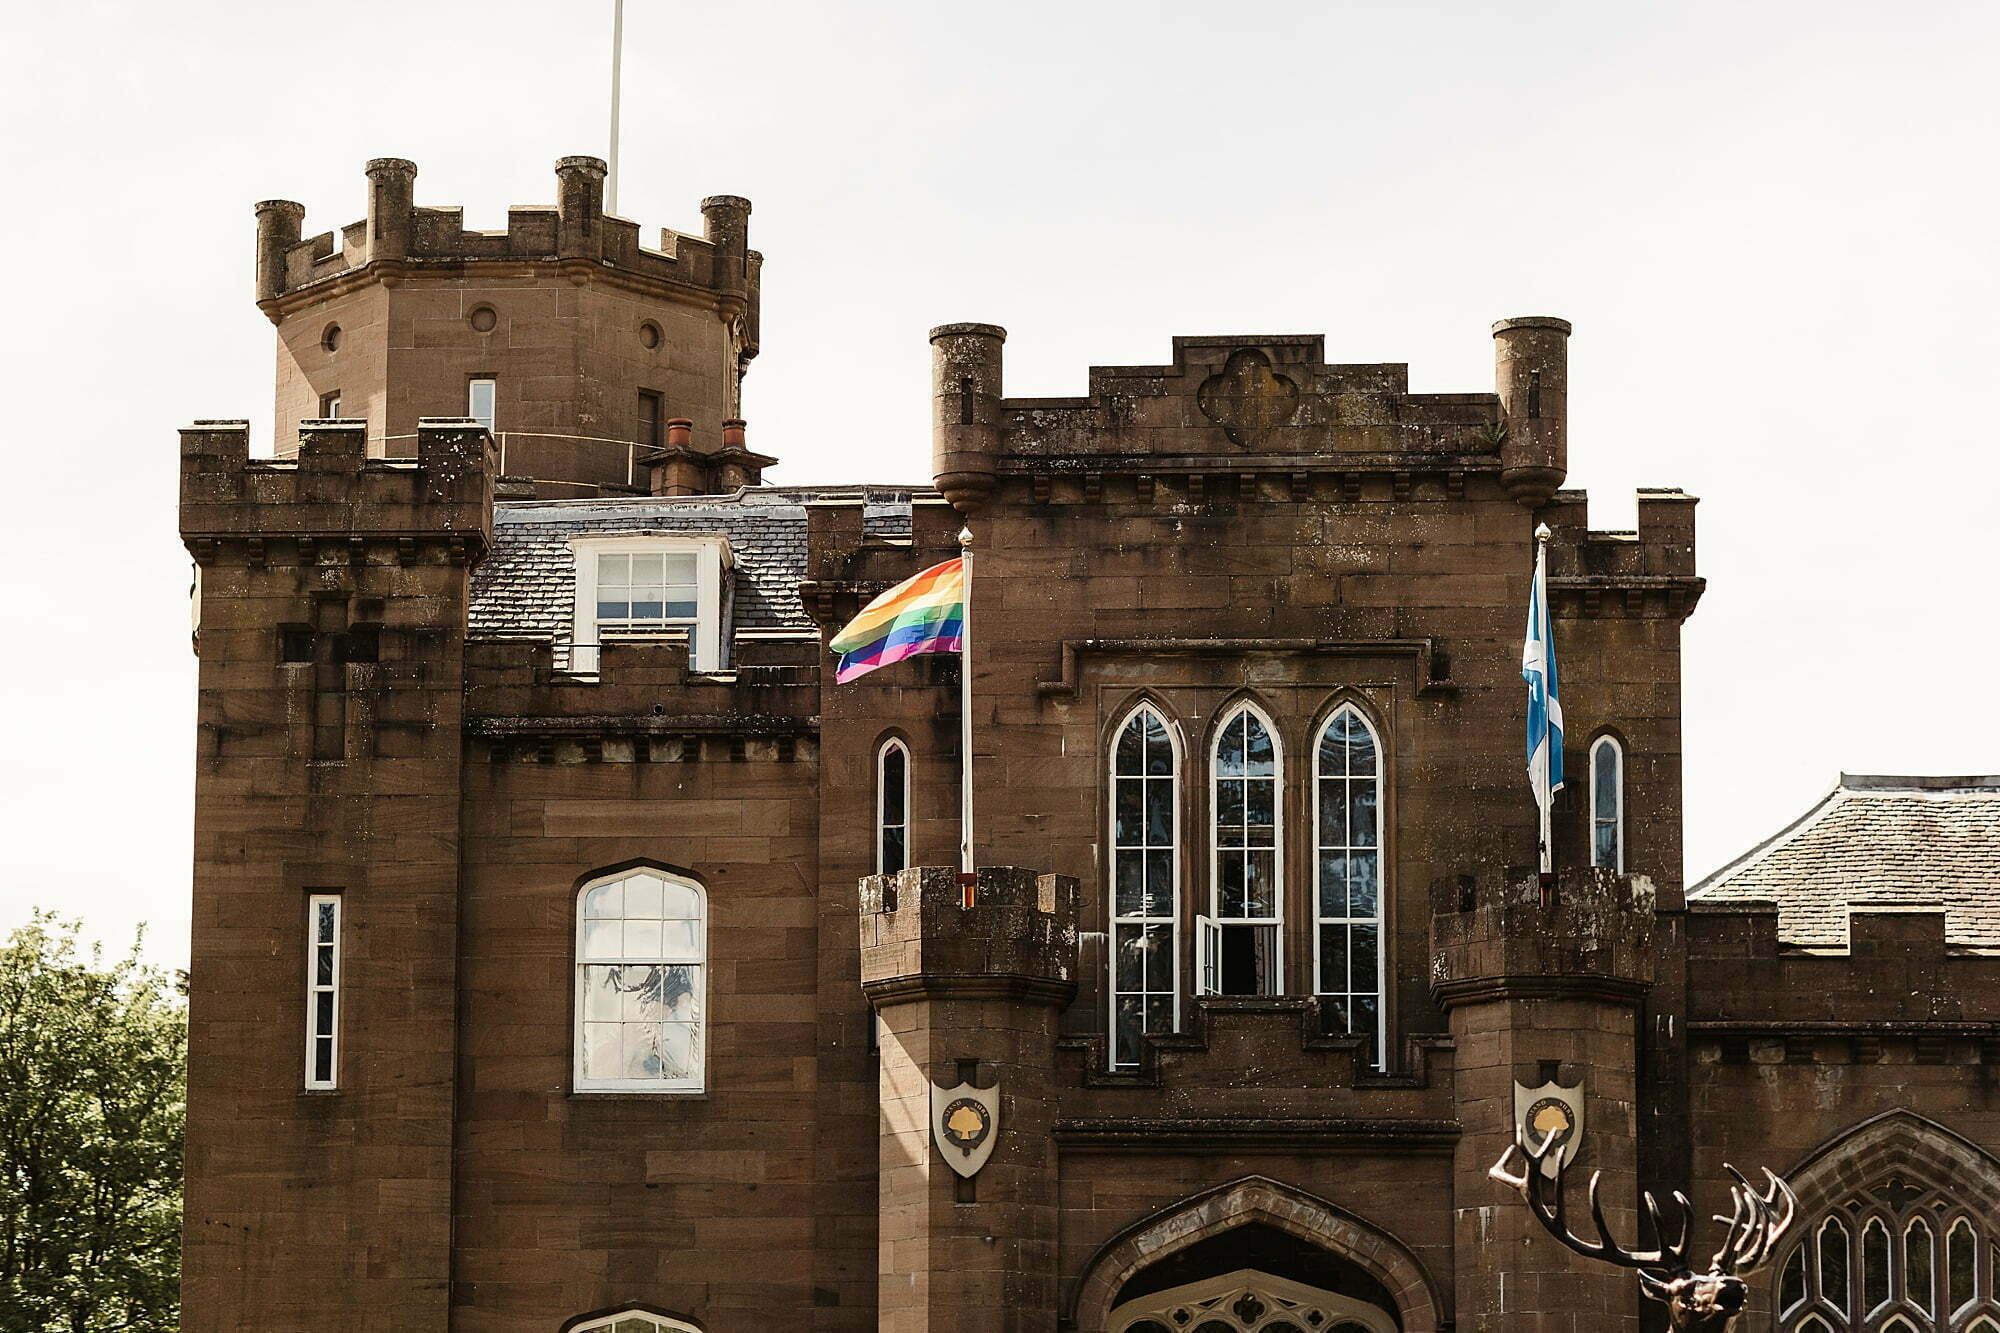 drumtochty castle exterior outside rainbow flag